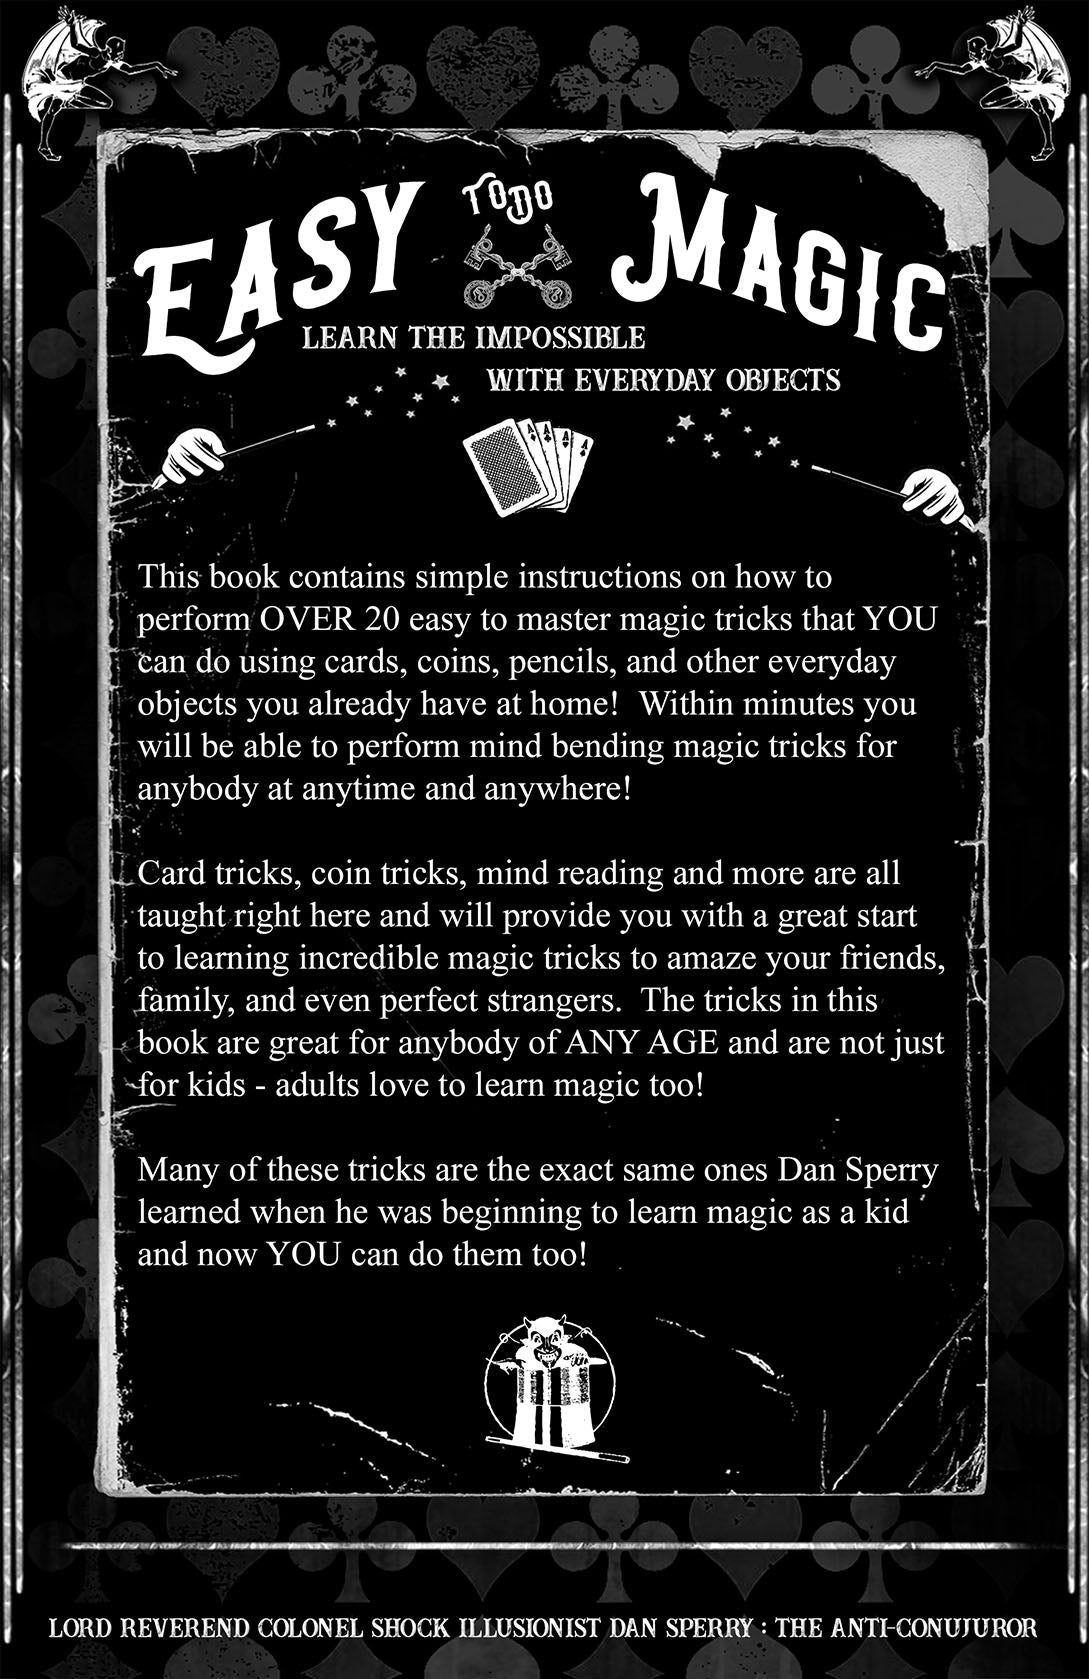 Learn an Easy Magic Trick! 